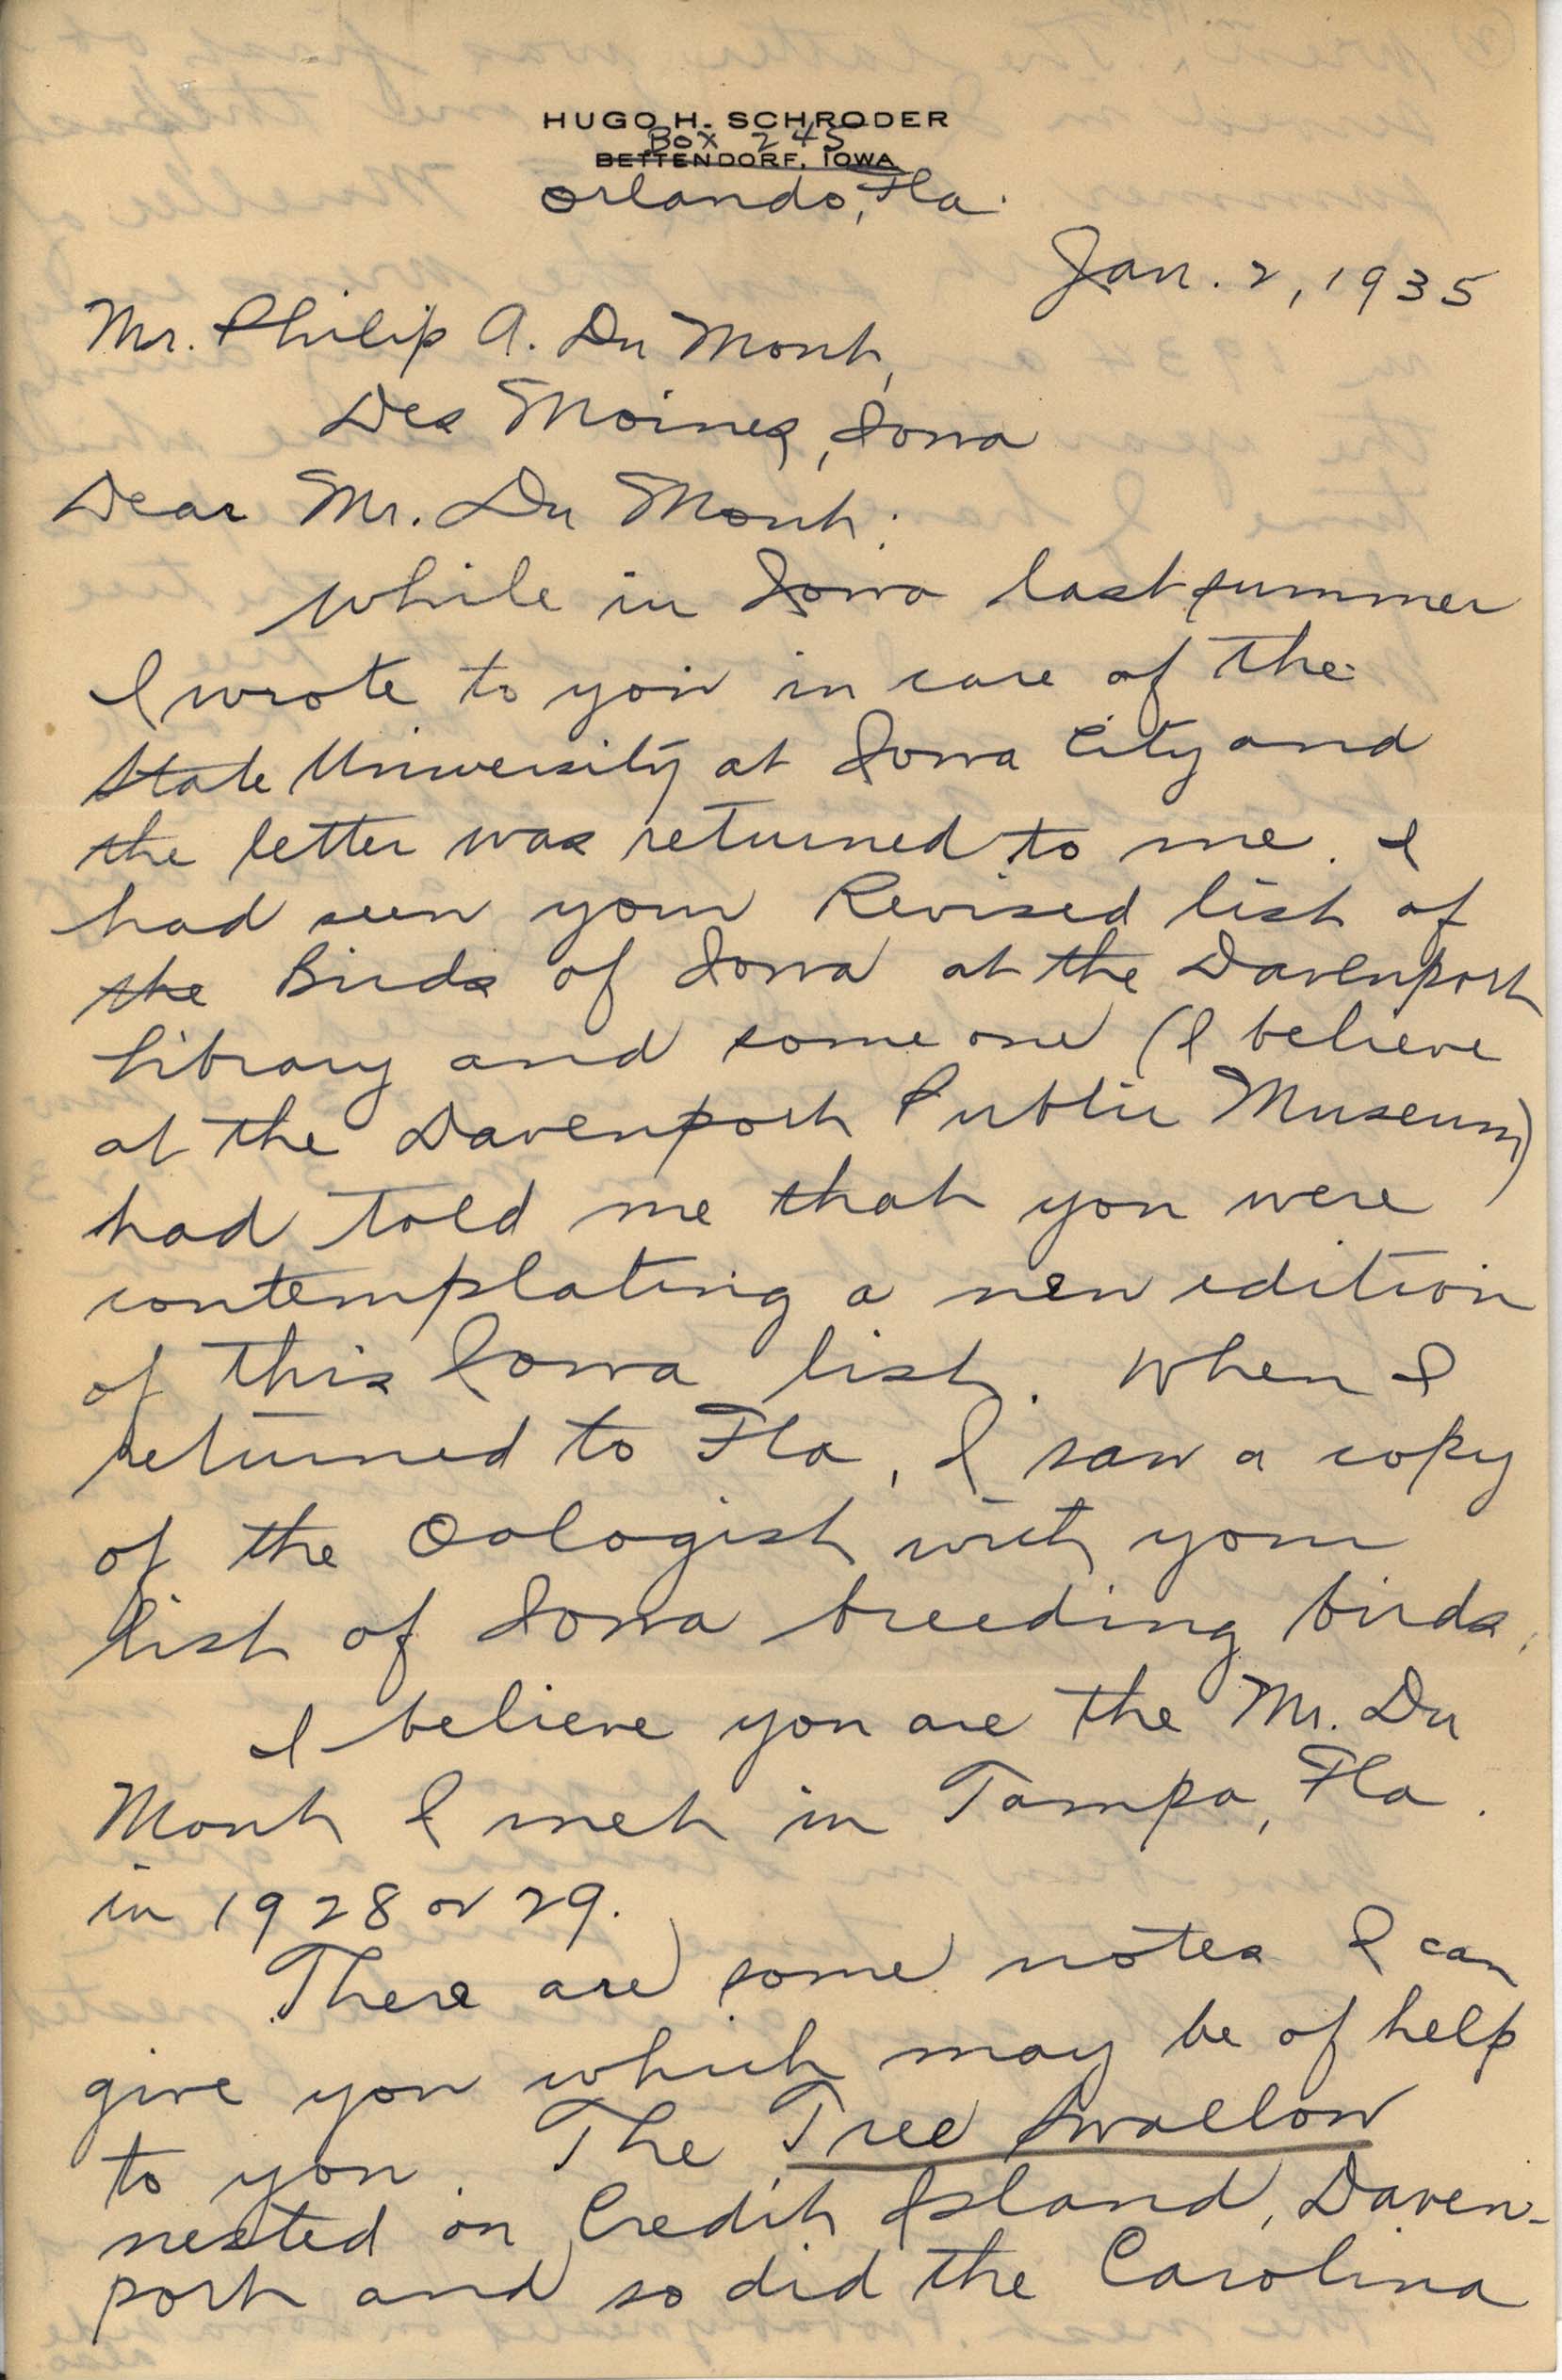 Hugo Schroder letter to Philip DuMont regarding nesting birds in Iowa, January 2, 1935